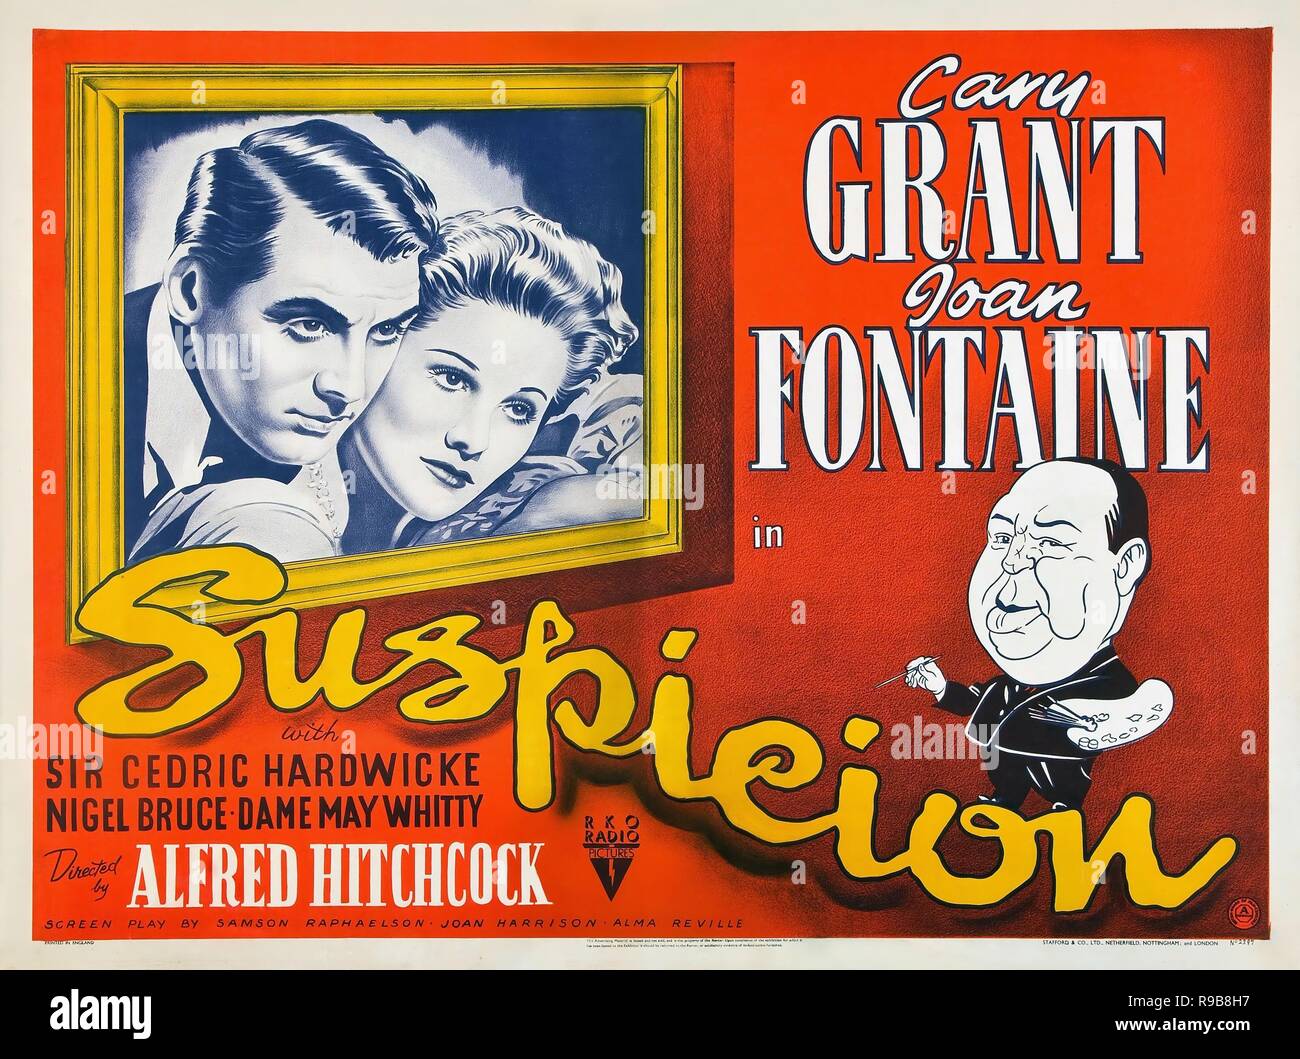 Original film title: SUSPICION. English title: SUSPICION. Year: 1941. Director: ALFRED HITCHCOCK. Credit: RKO / Album Stock Photo